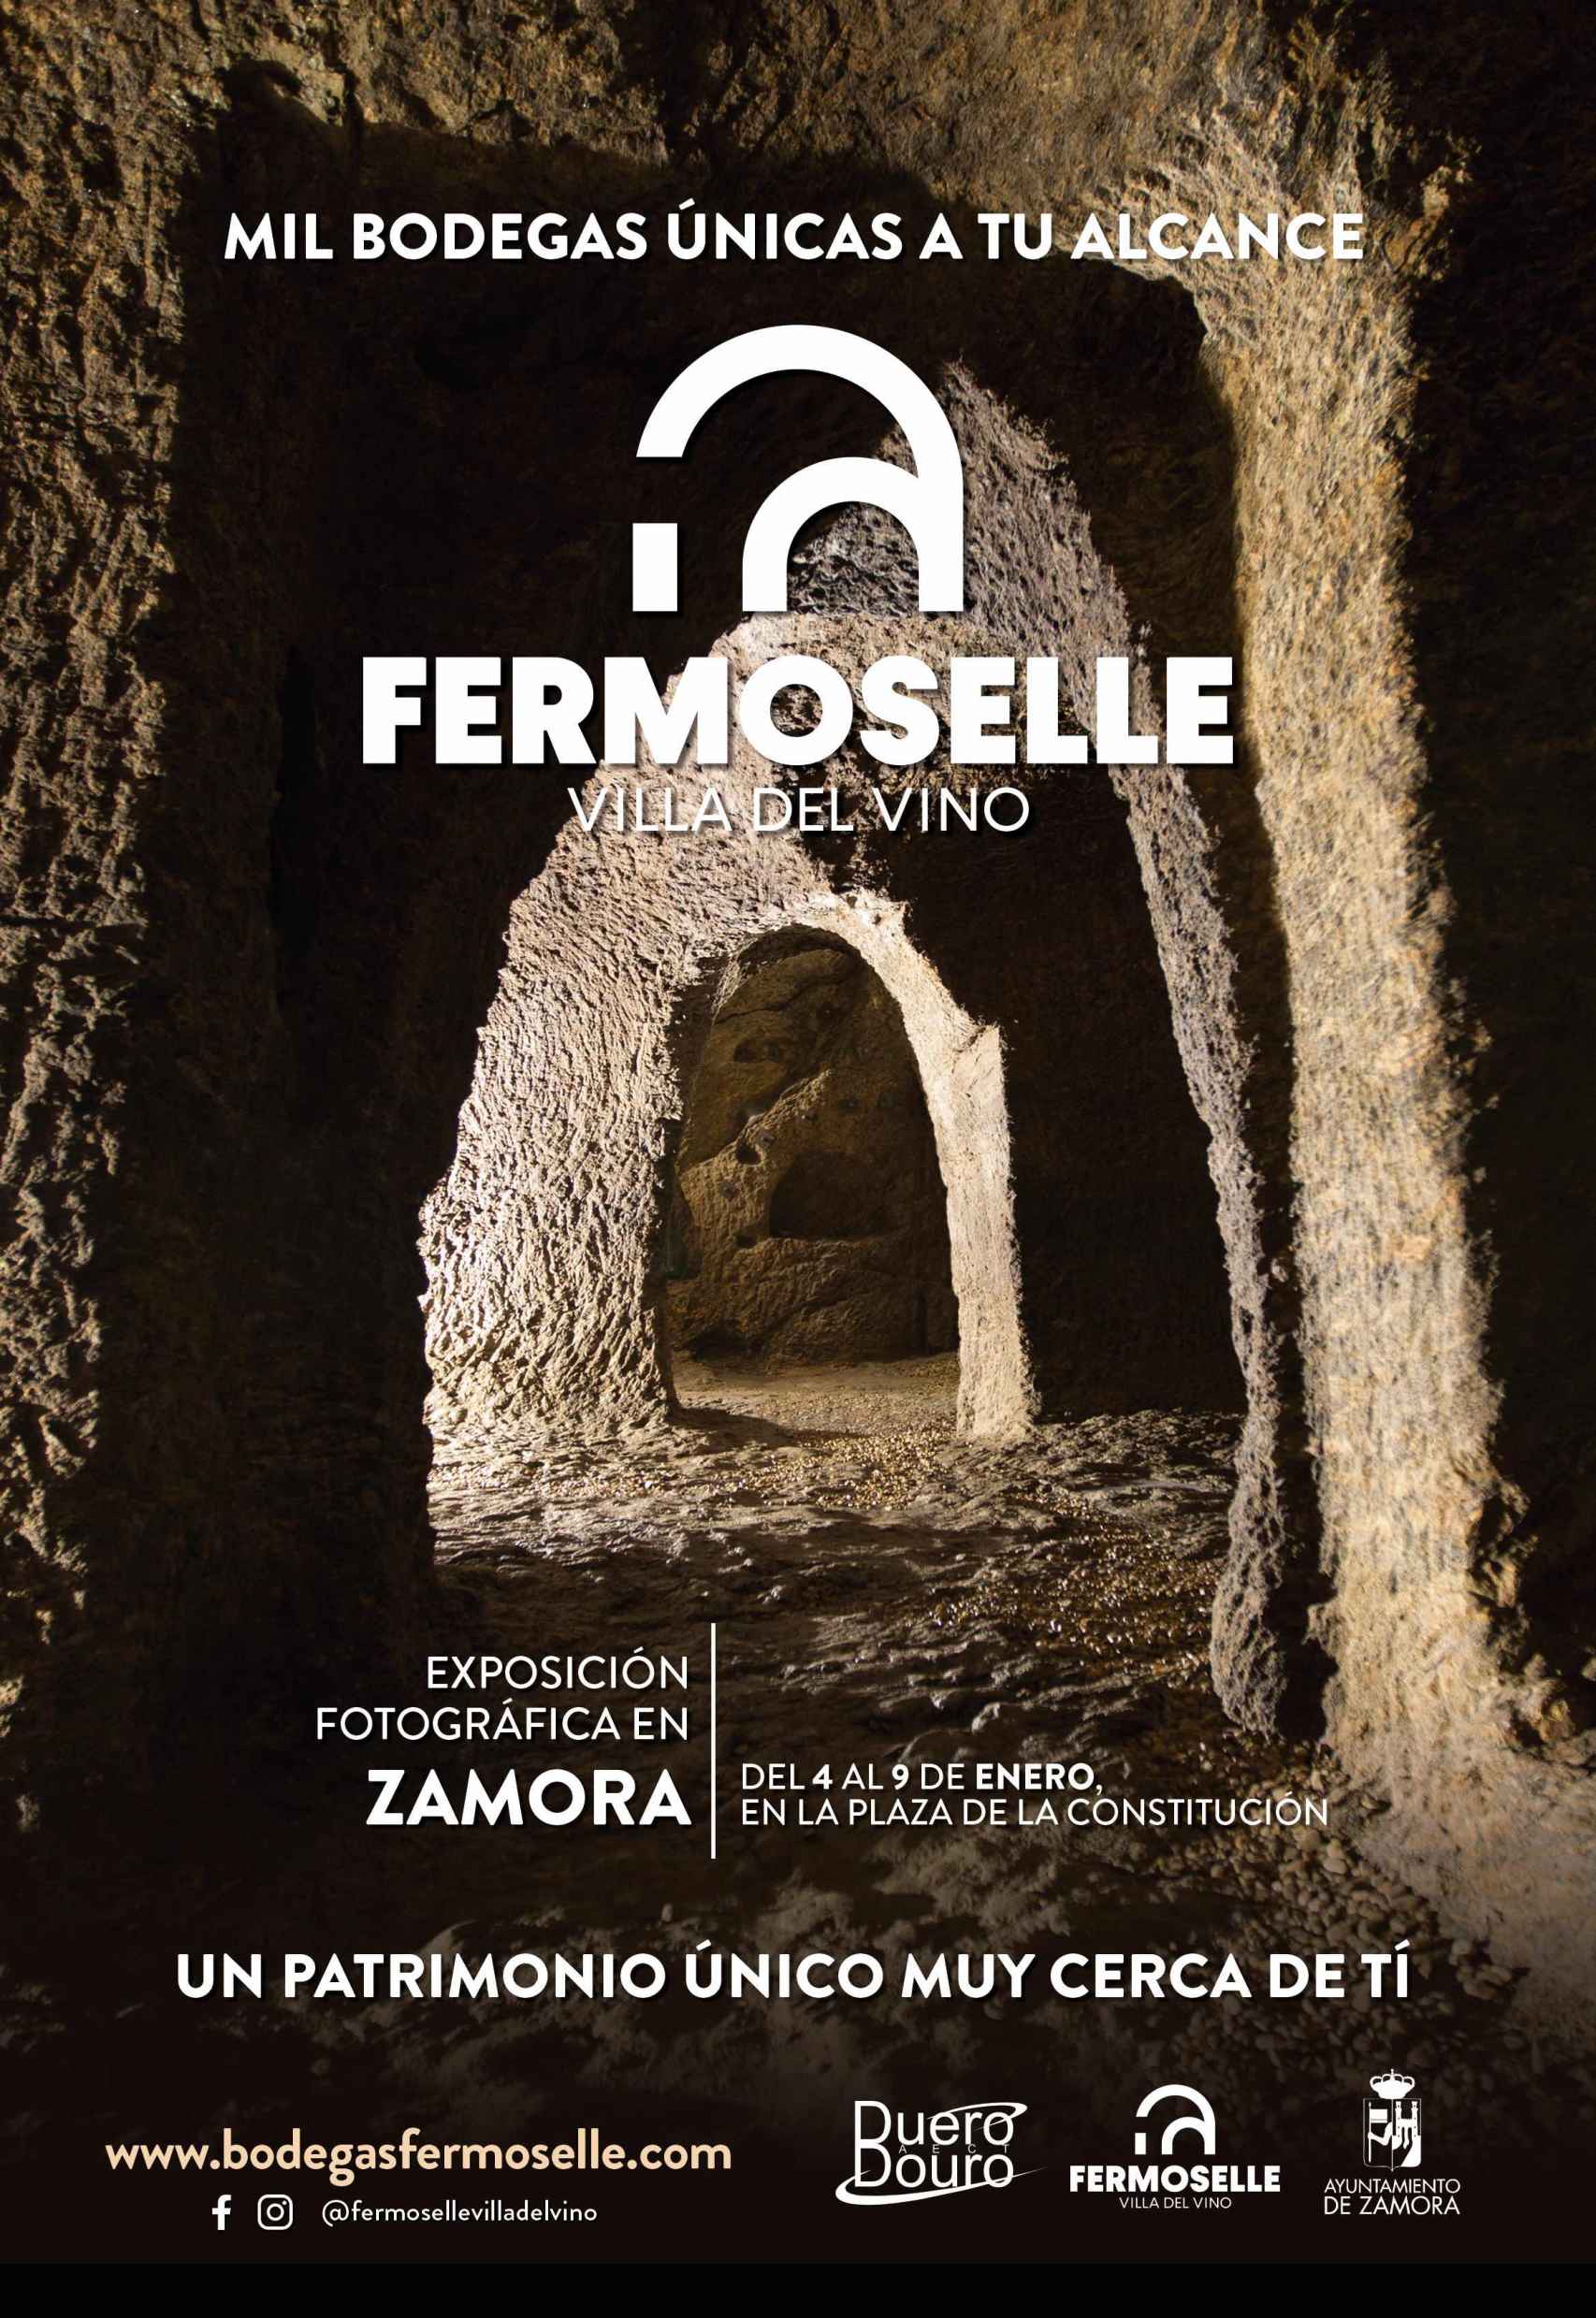 Cartel de la exposición en Zamora de las bodegas subterráneas de Fermoselle.